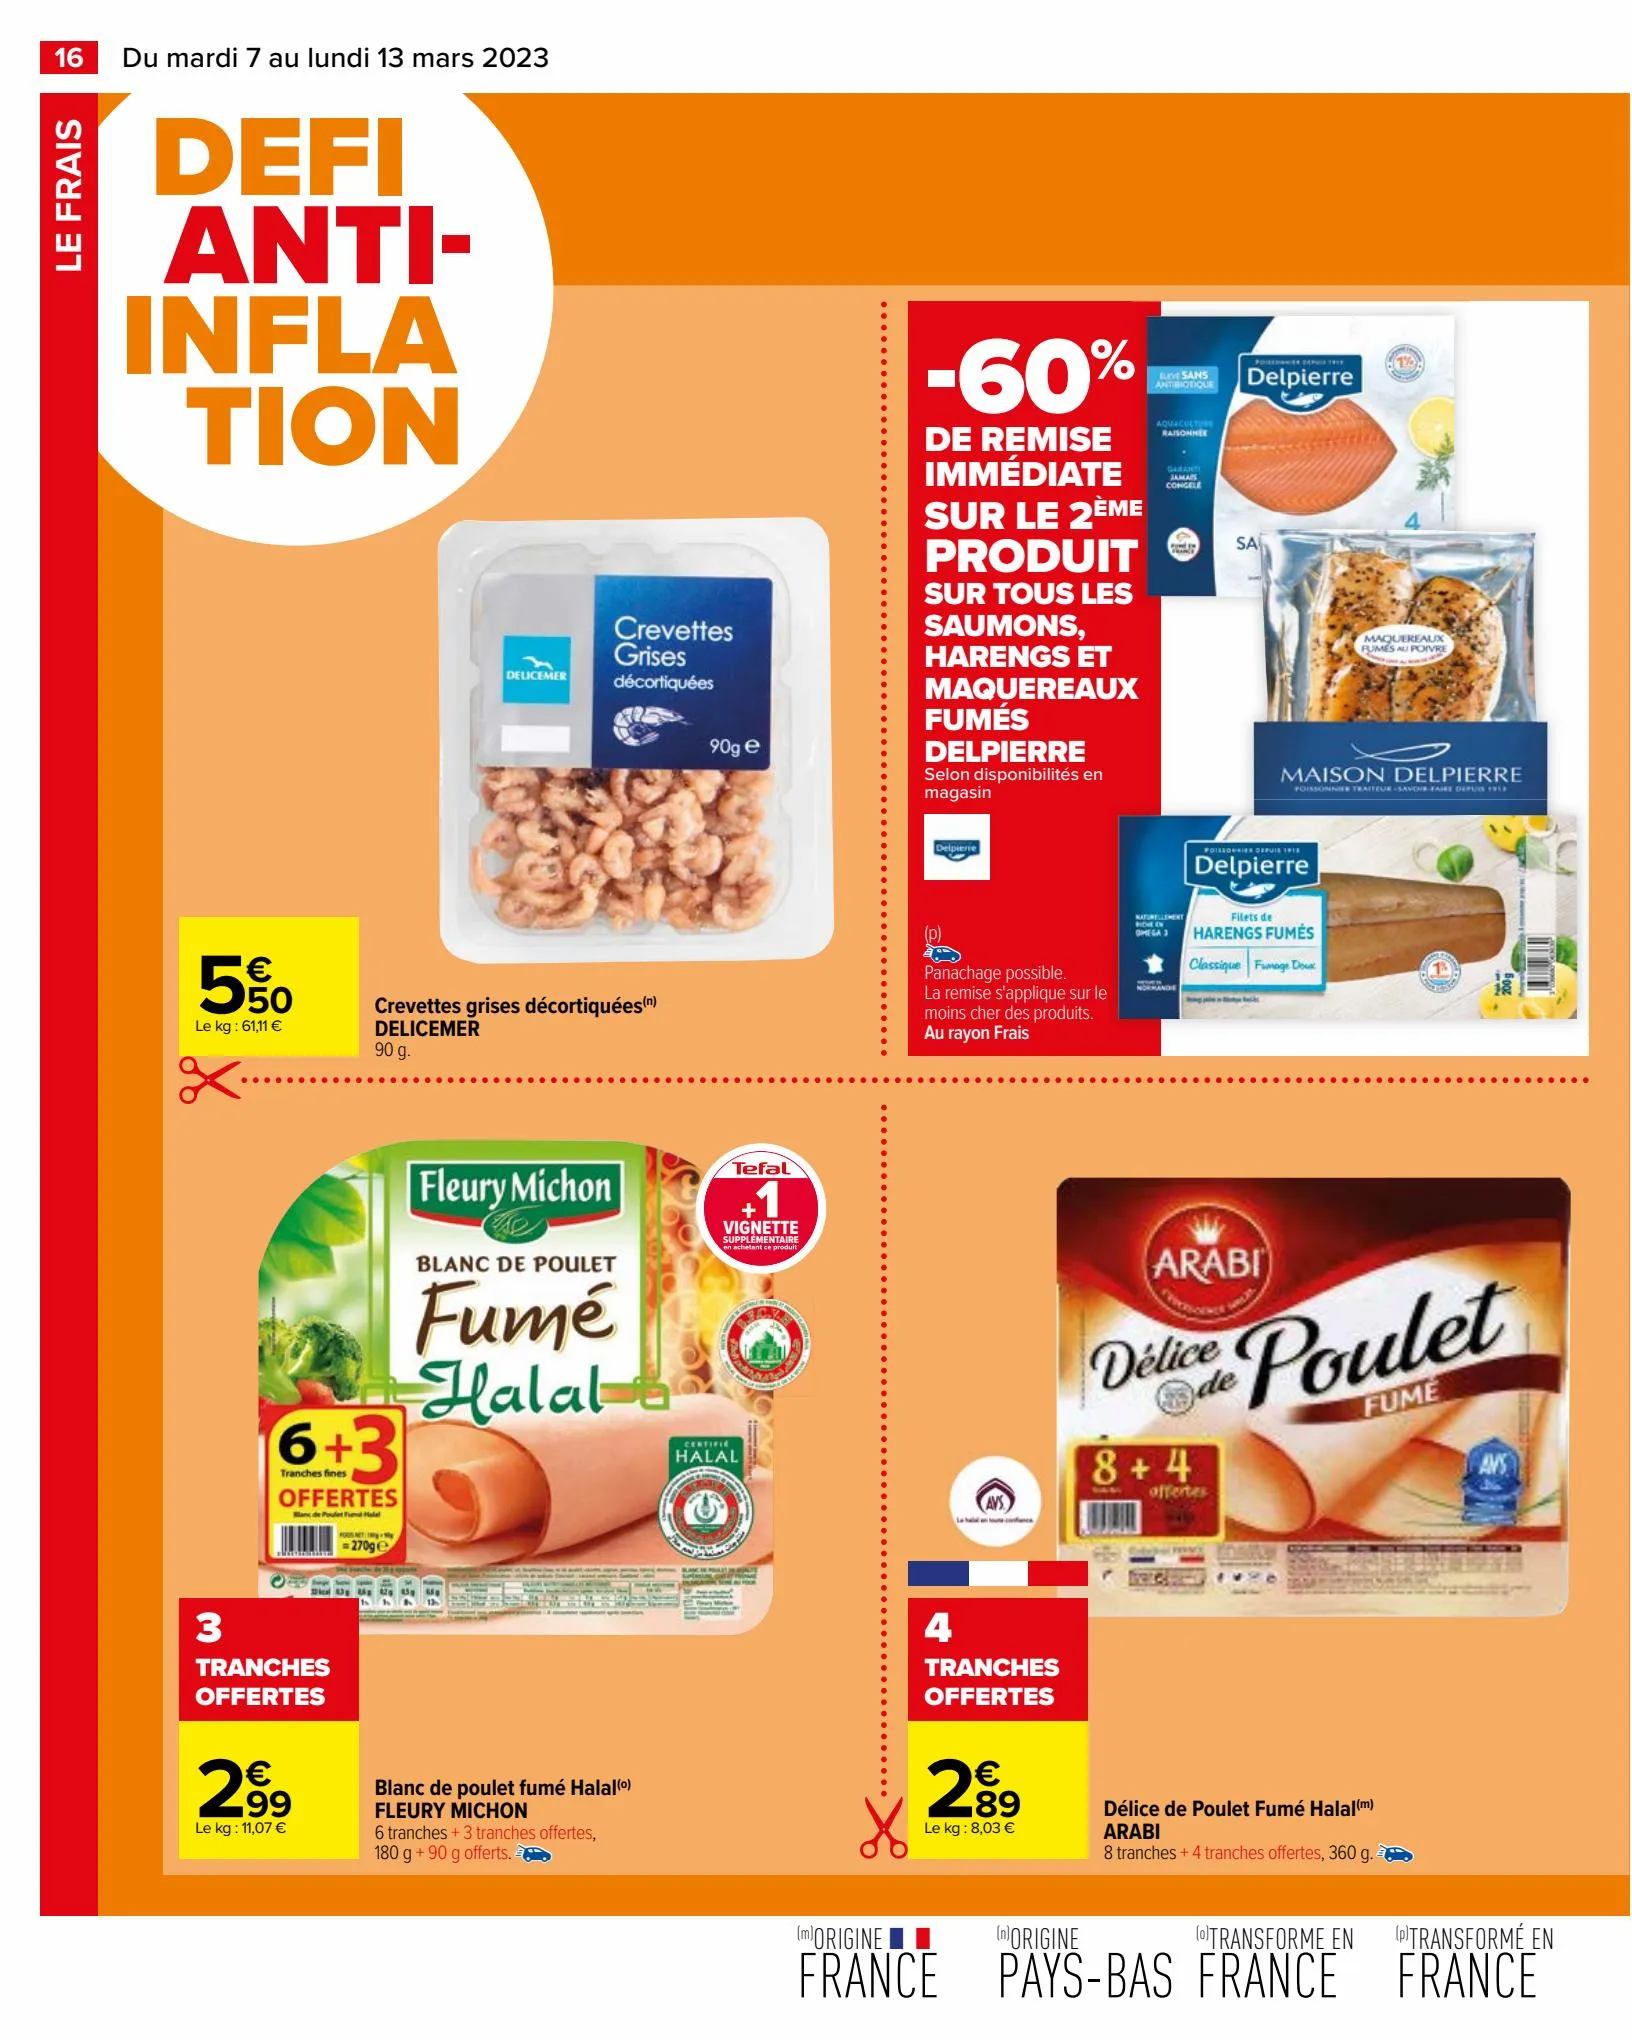 Catalogue Defi Anti-inflation, page 00016